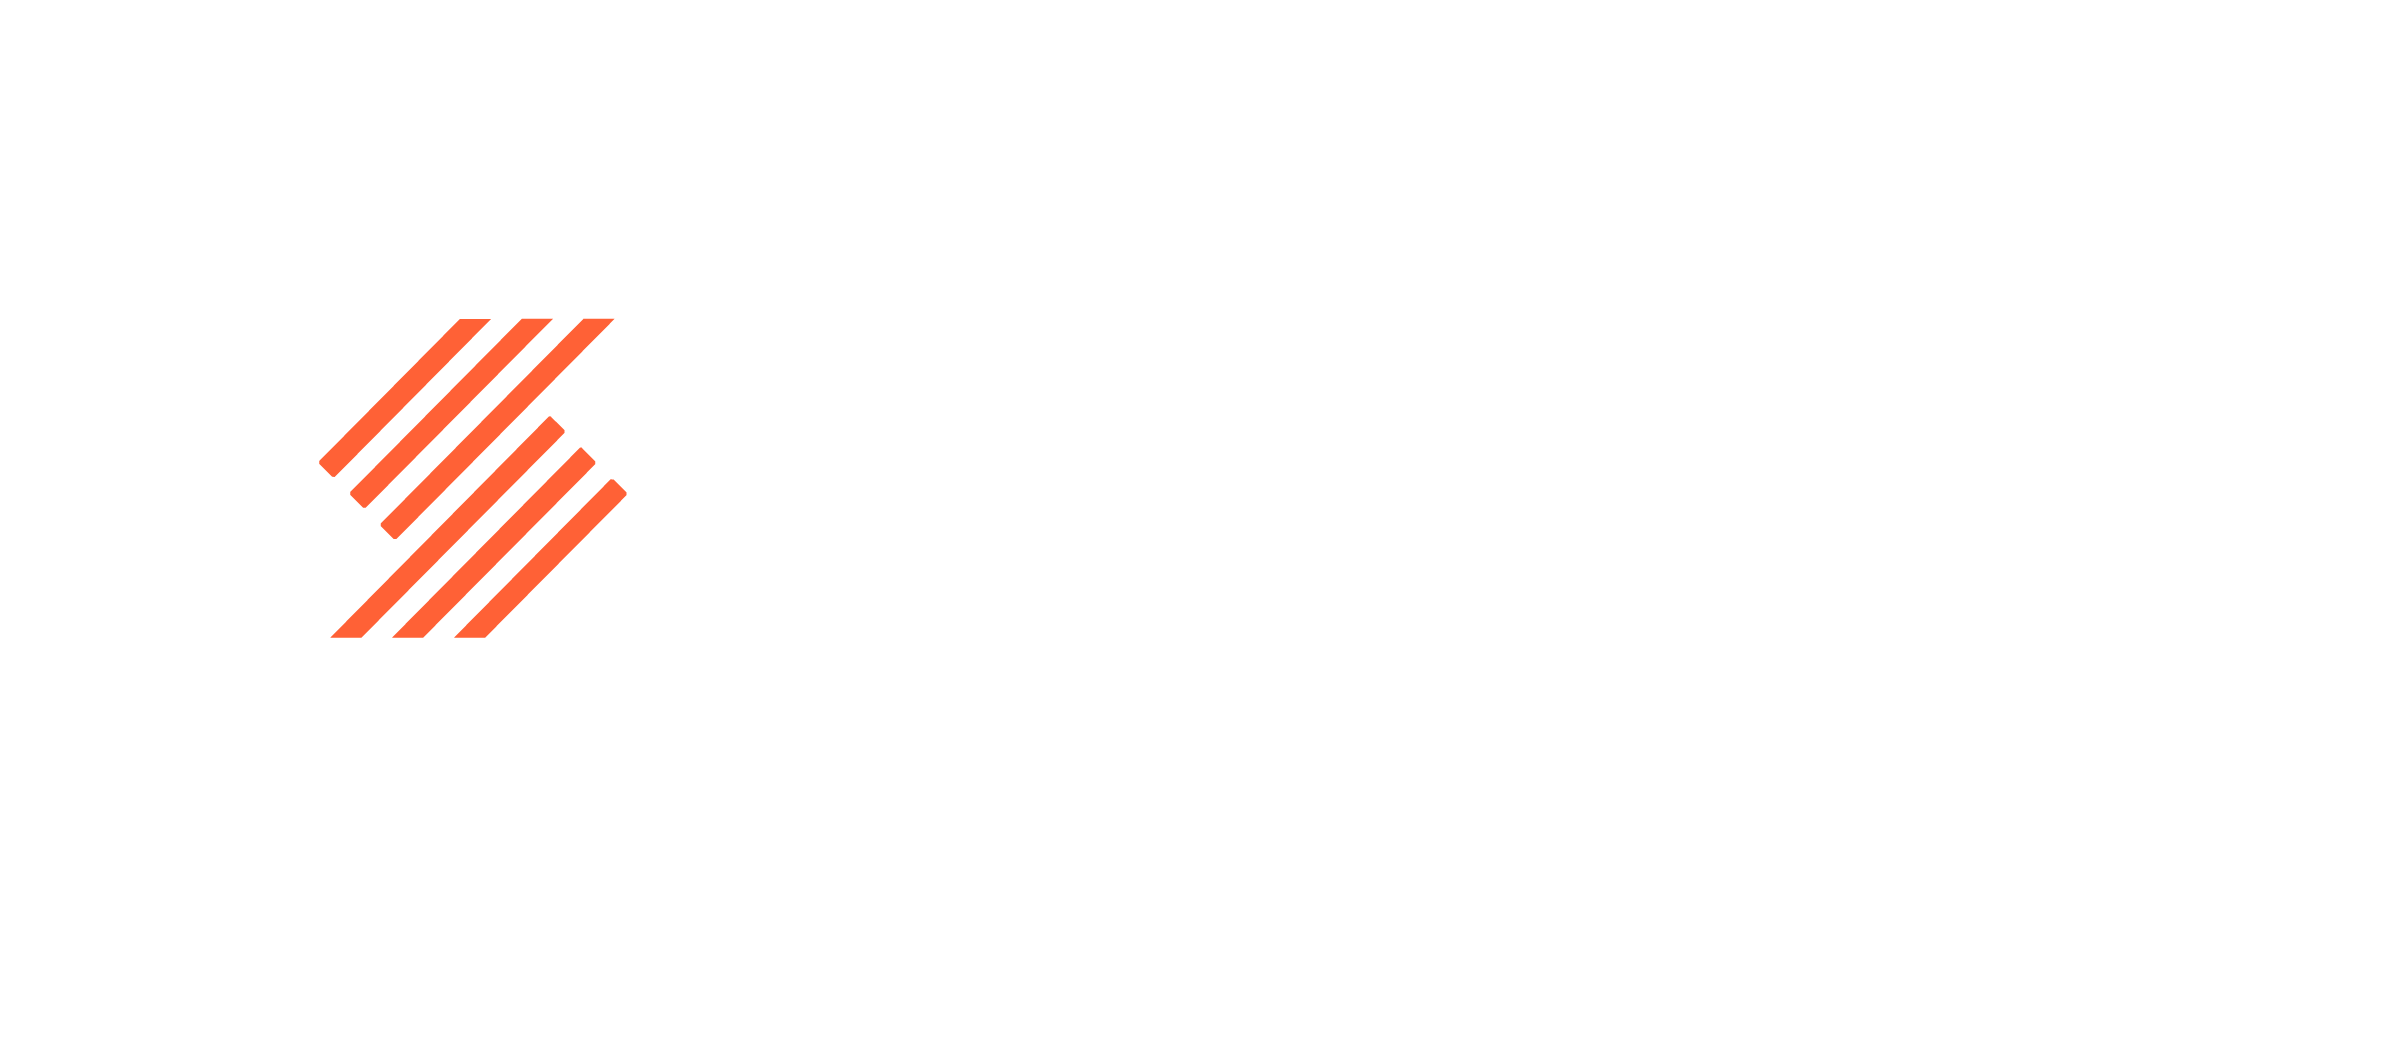 adapps septeo